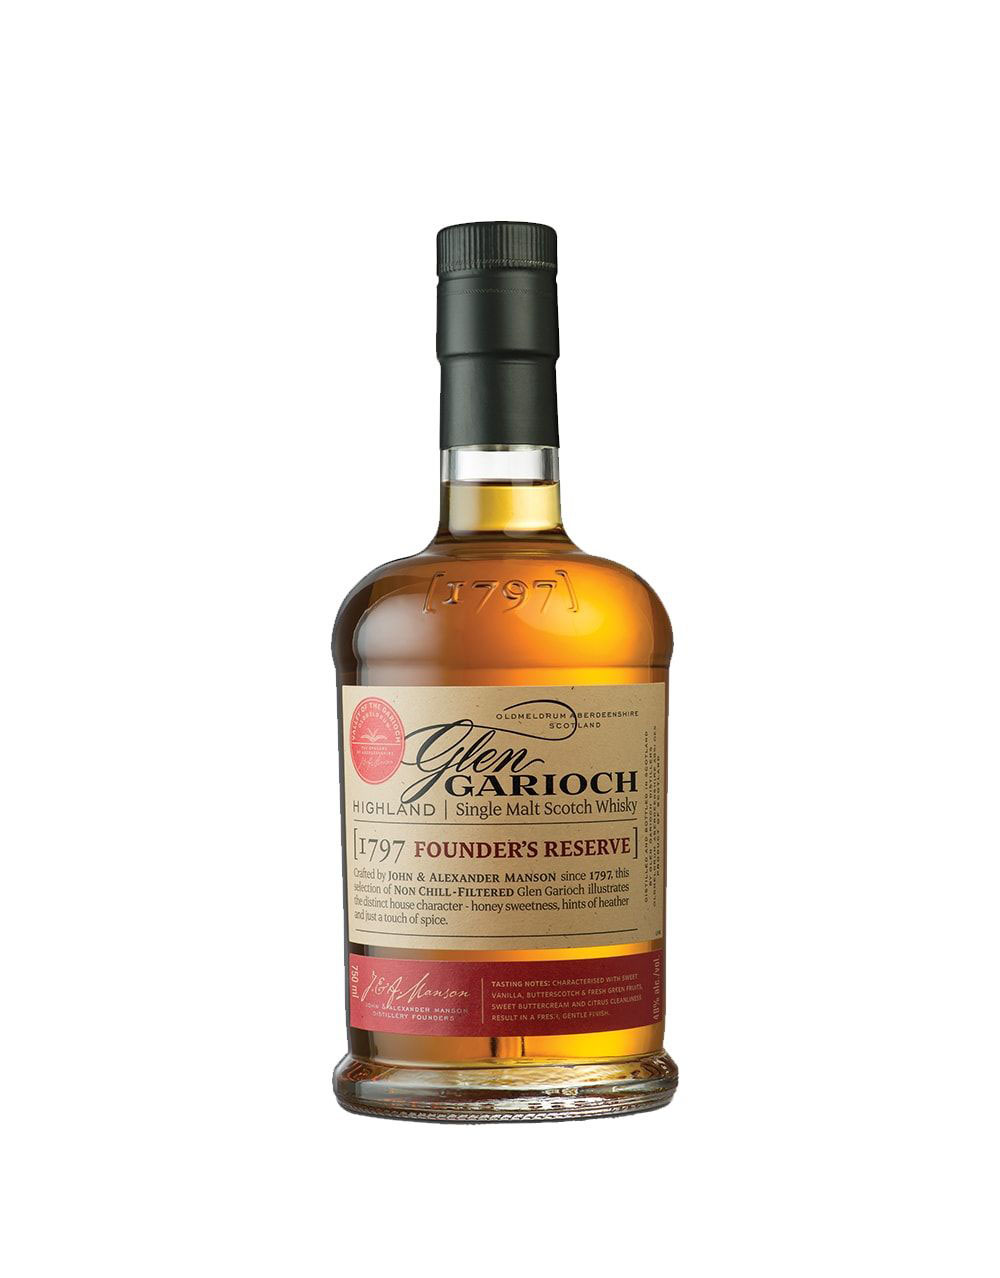 Glen Garioch 1797 Founders Reserve Single Malt Scotch Whisky